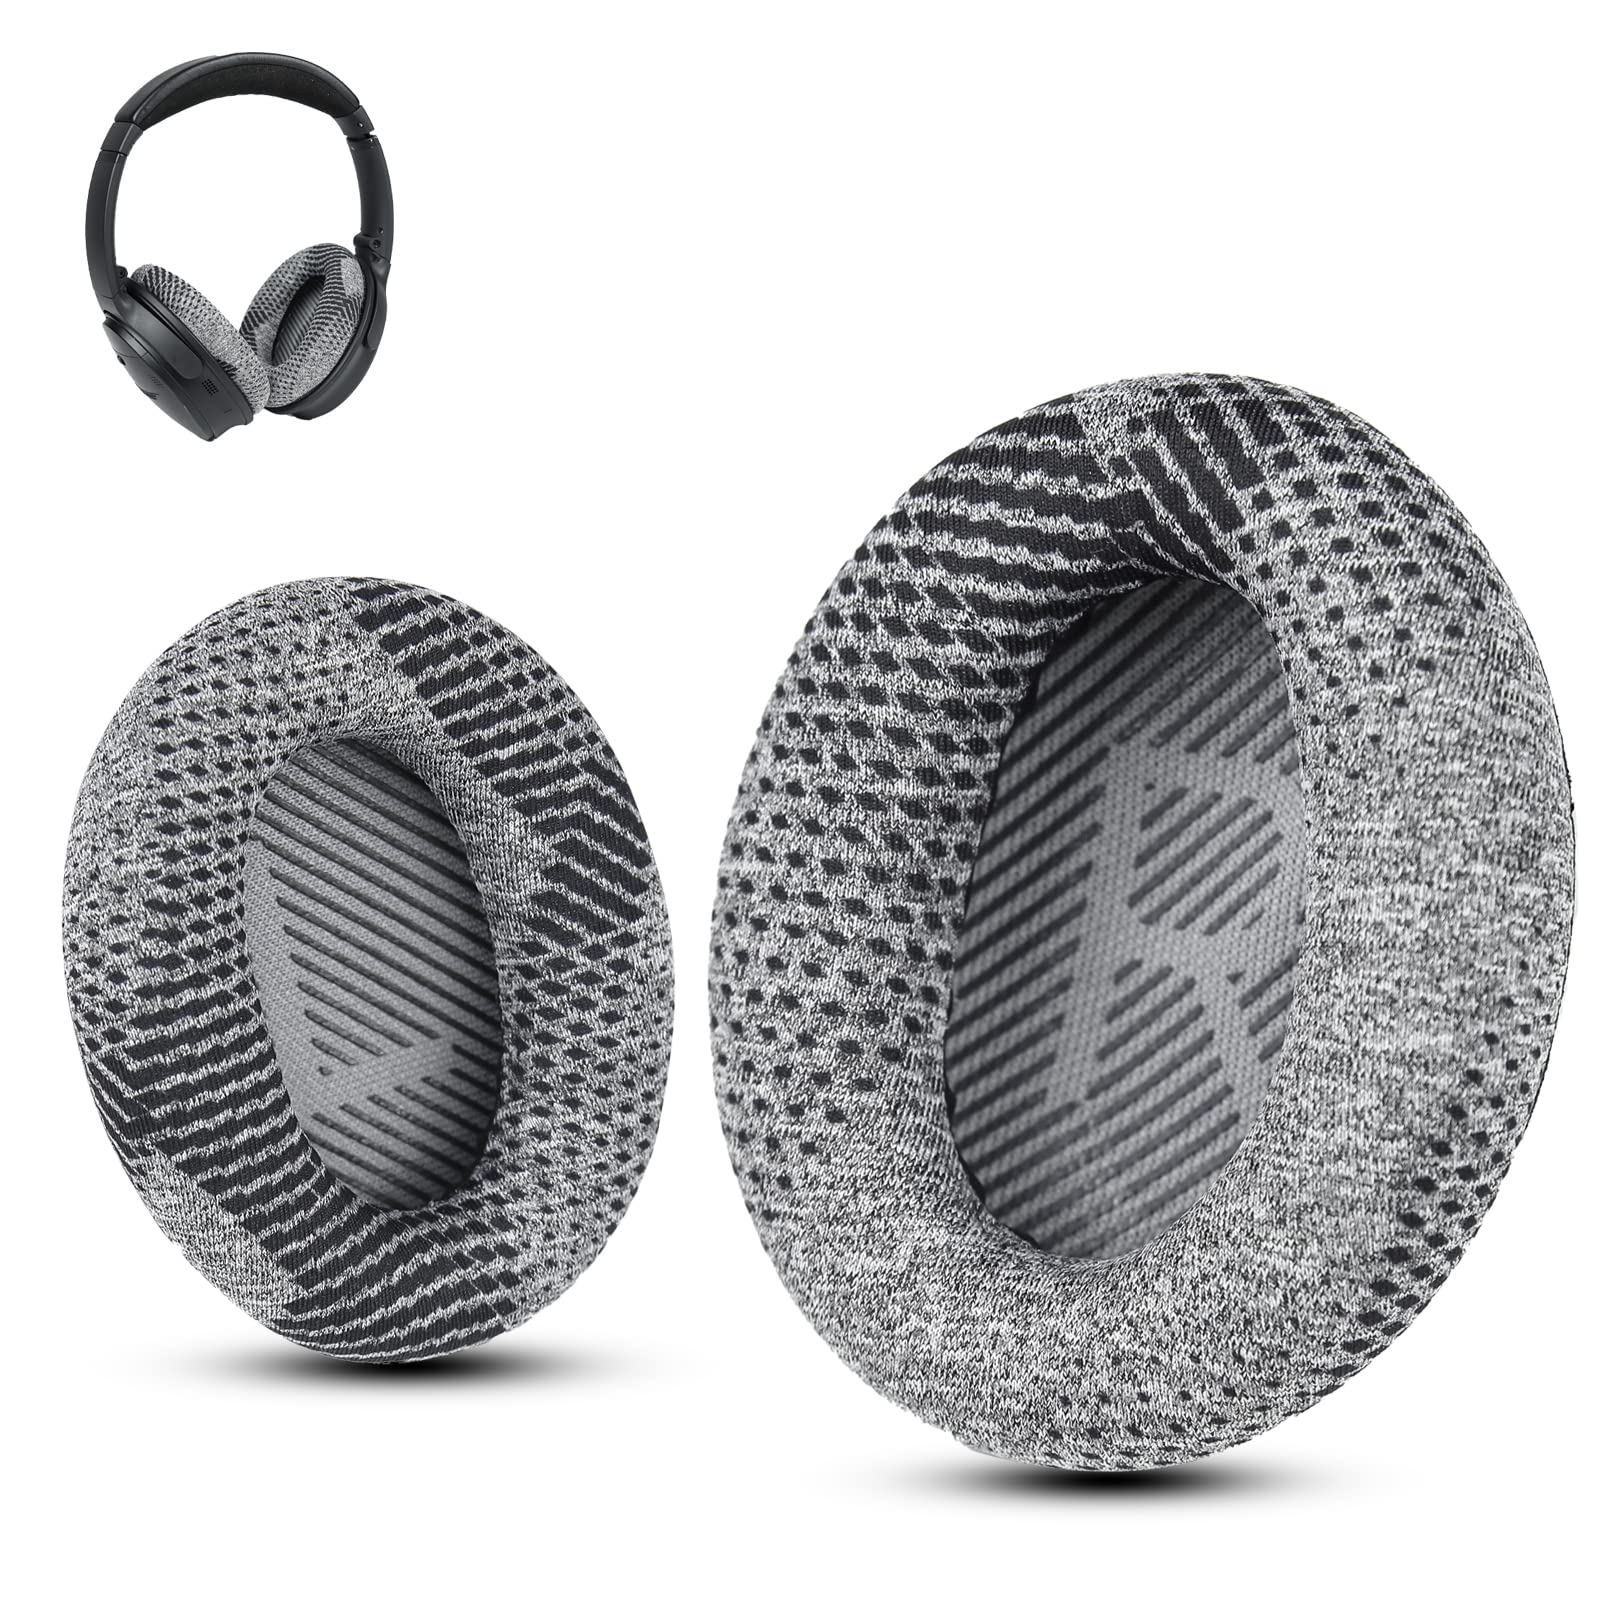 Krone Kalpasmos Patterned Professional Bose Headphone Replacement Ear Pads